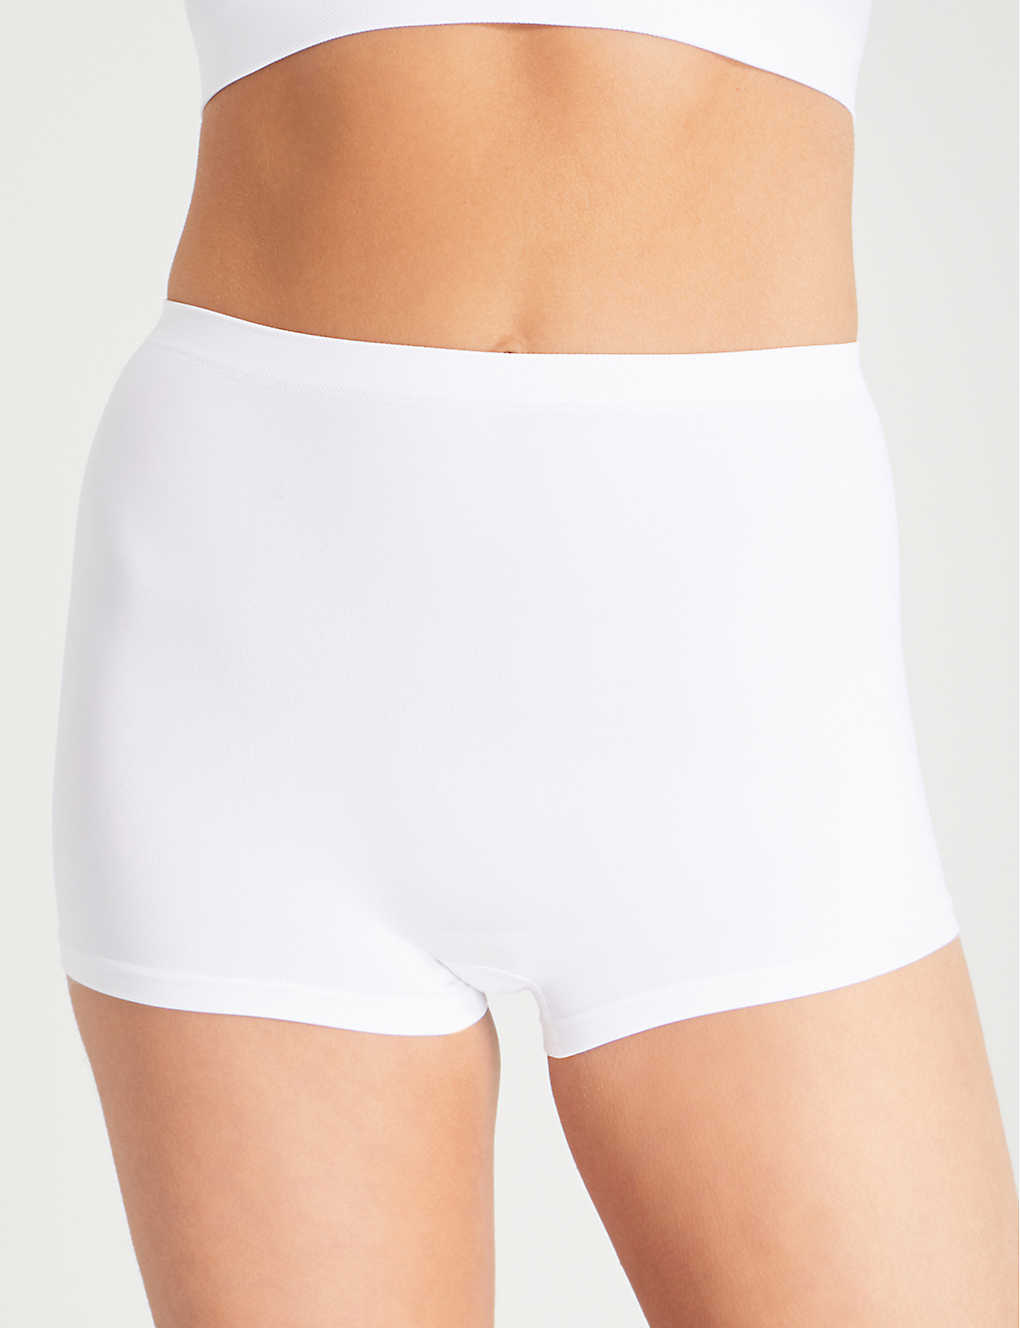 Shop Hanro Women's White Touch Feeling Microfiber Boy Shorts